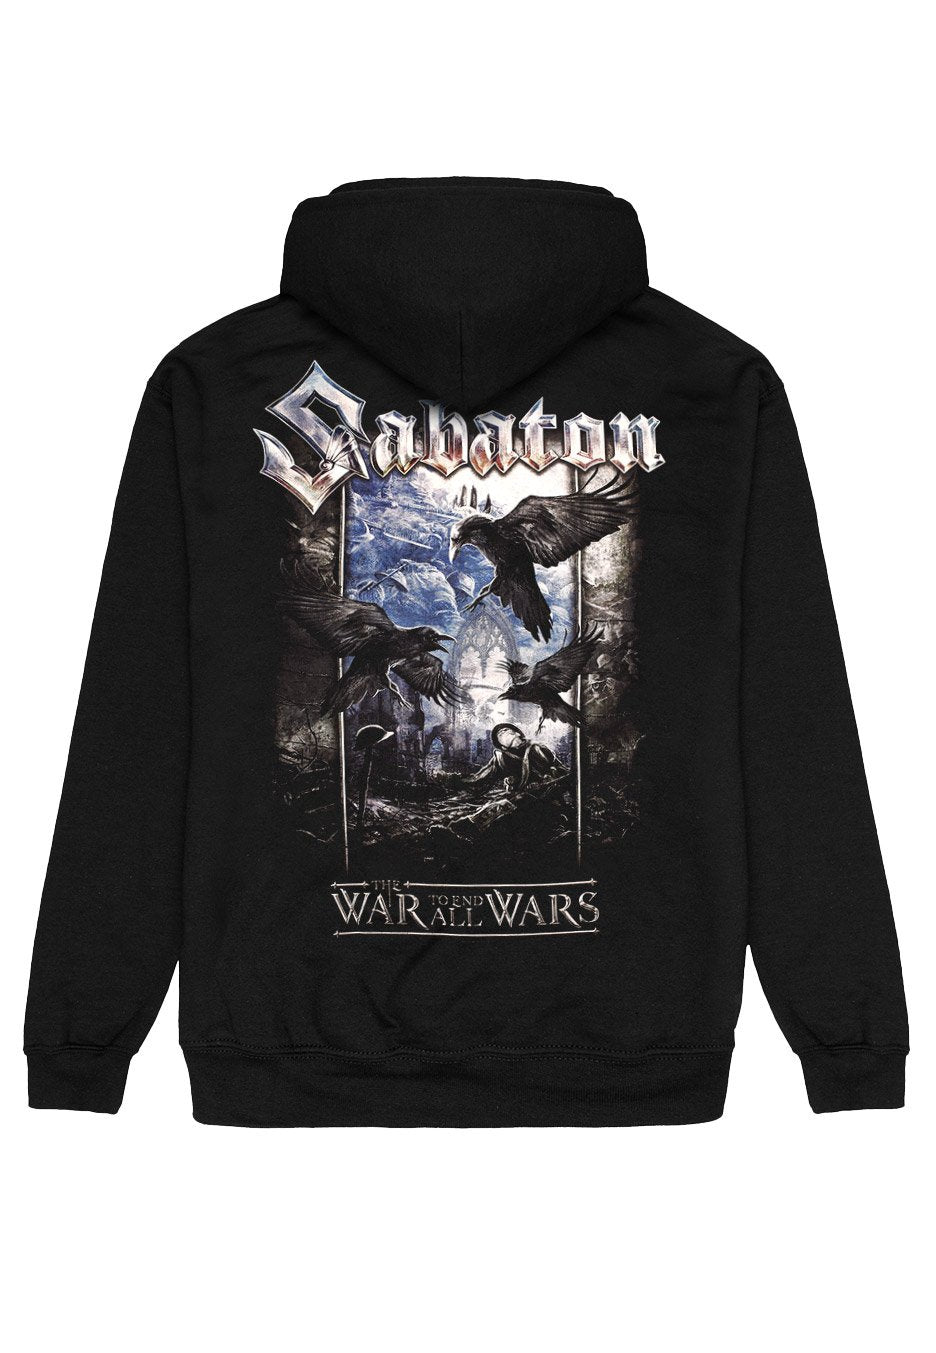 Sabaton - The War To End All Wars - Zipper